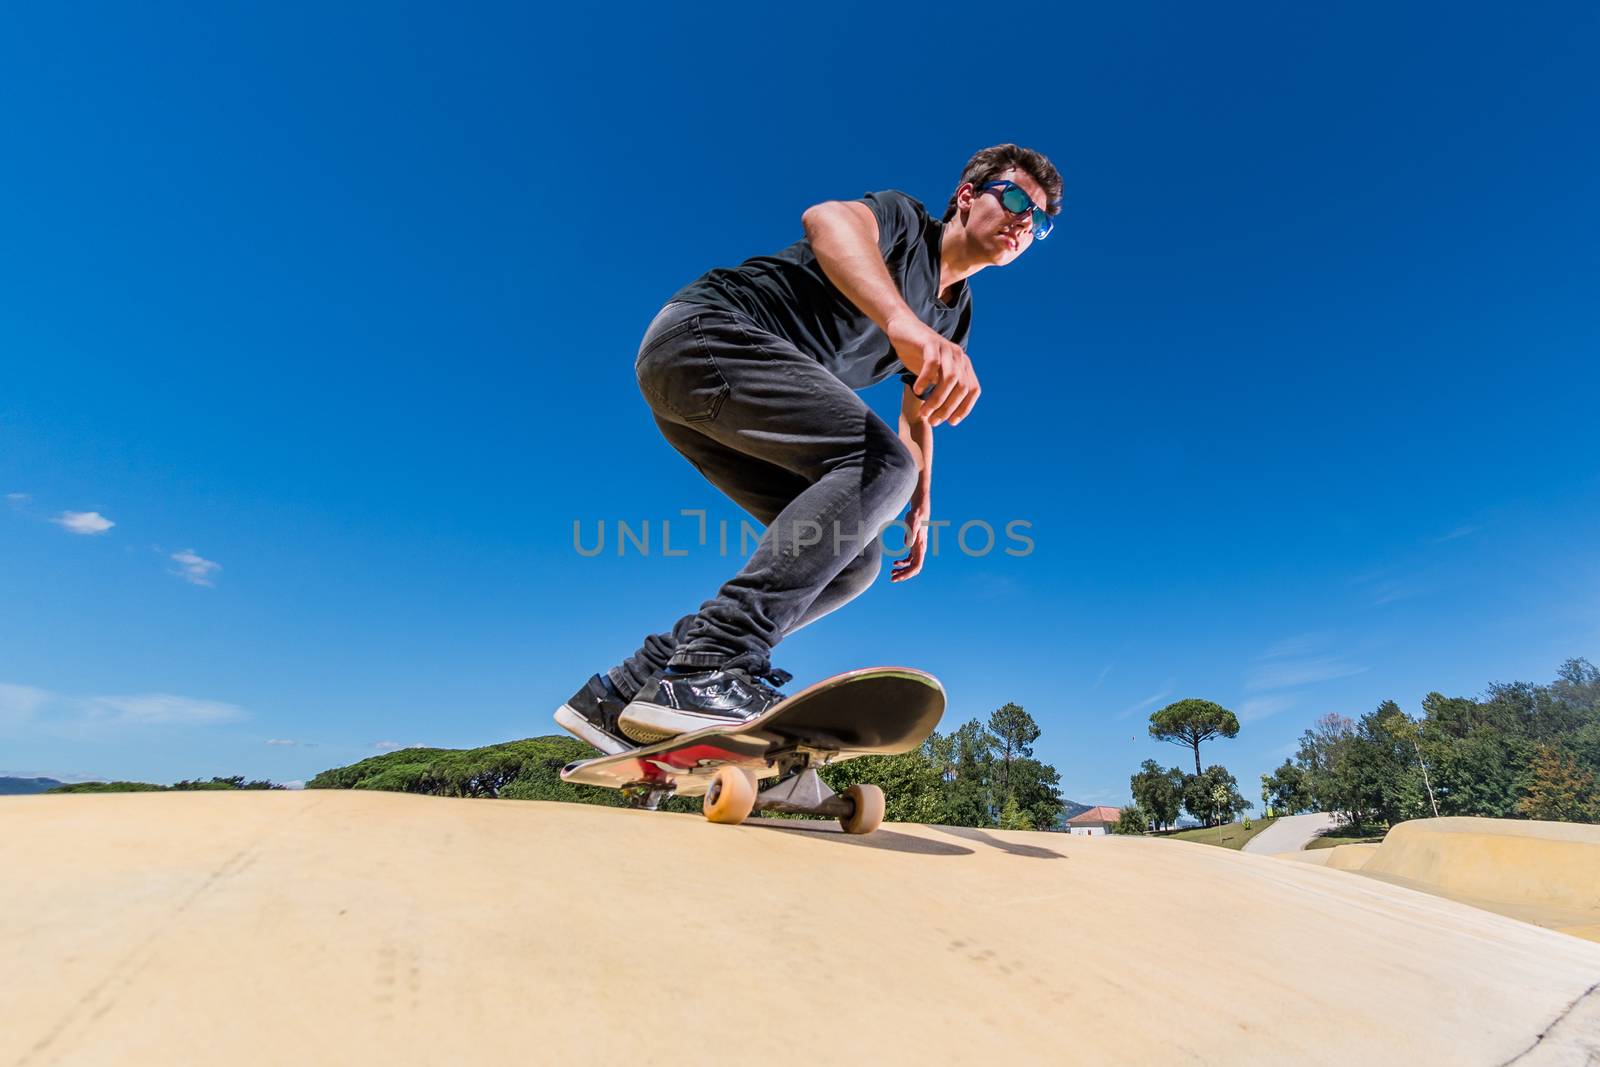 Skateboarder on a pump track park by homydesign